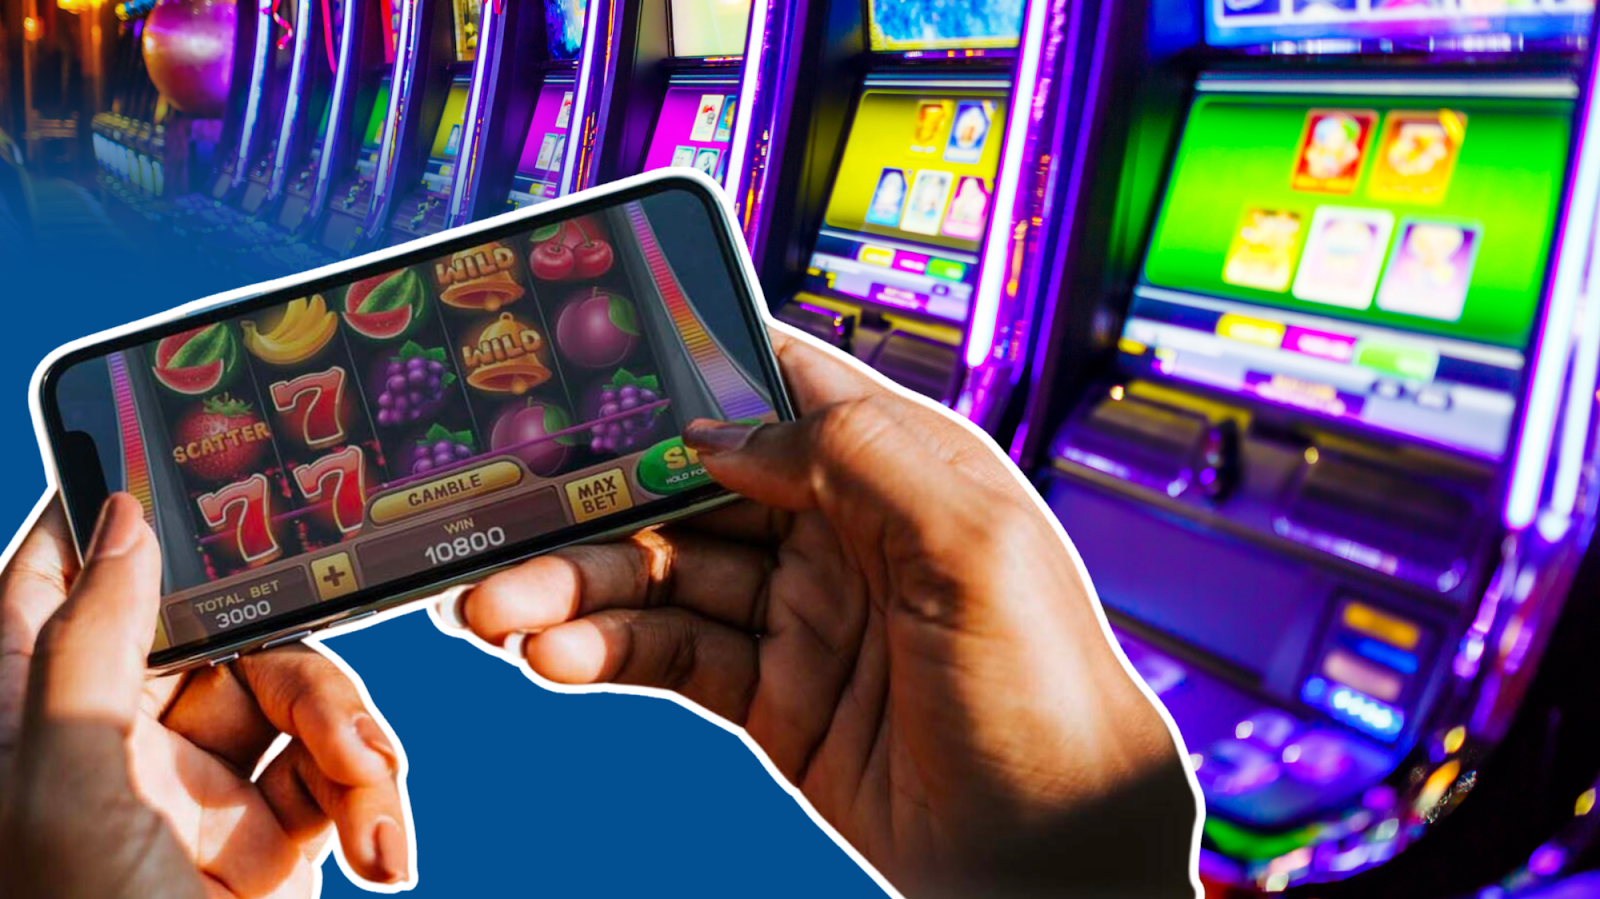 Menelusuri Fakta Tersembunyi di Balik Keberuntungan Permainan Slot Online